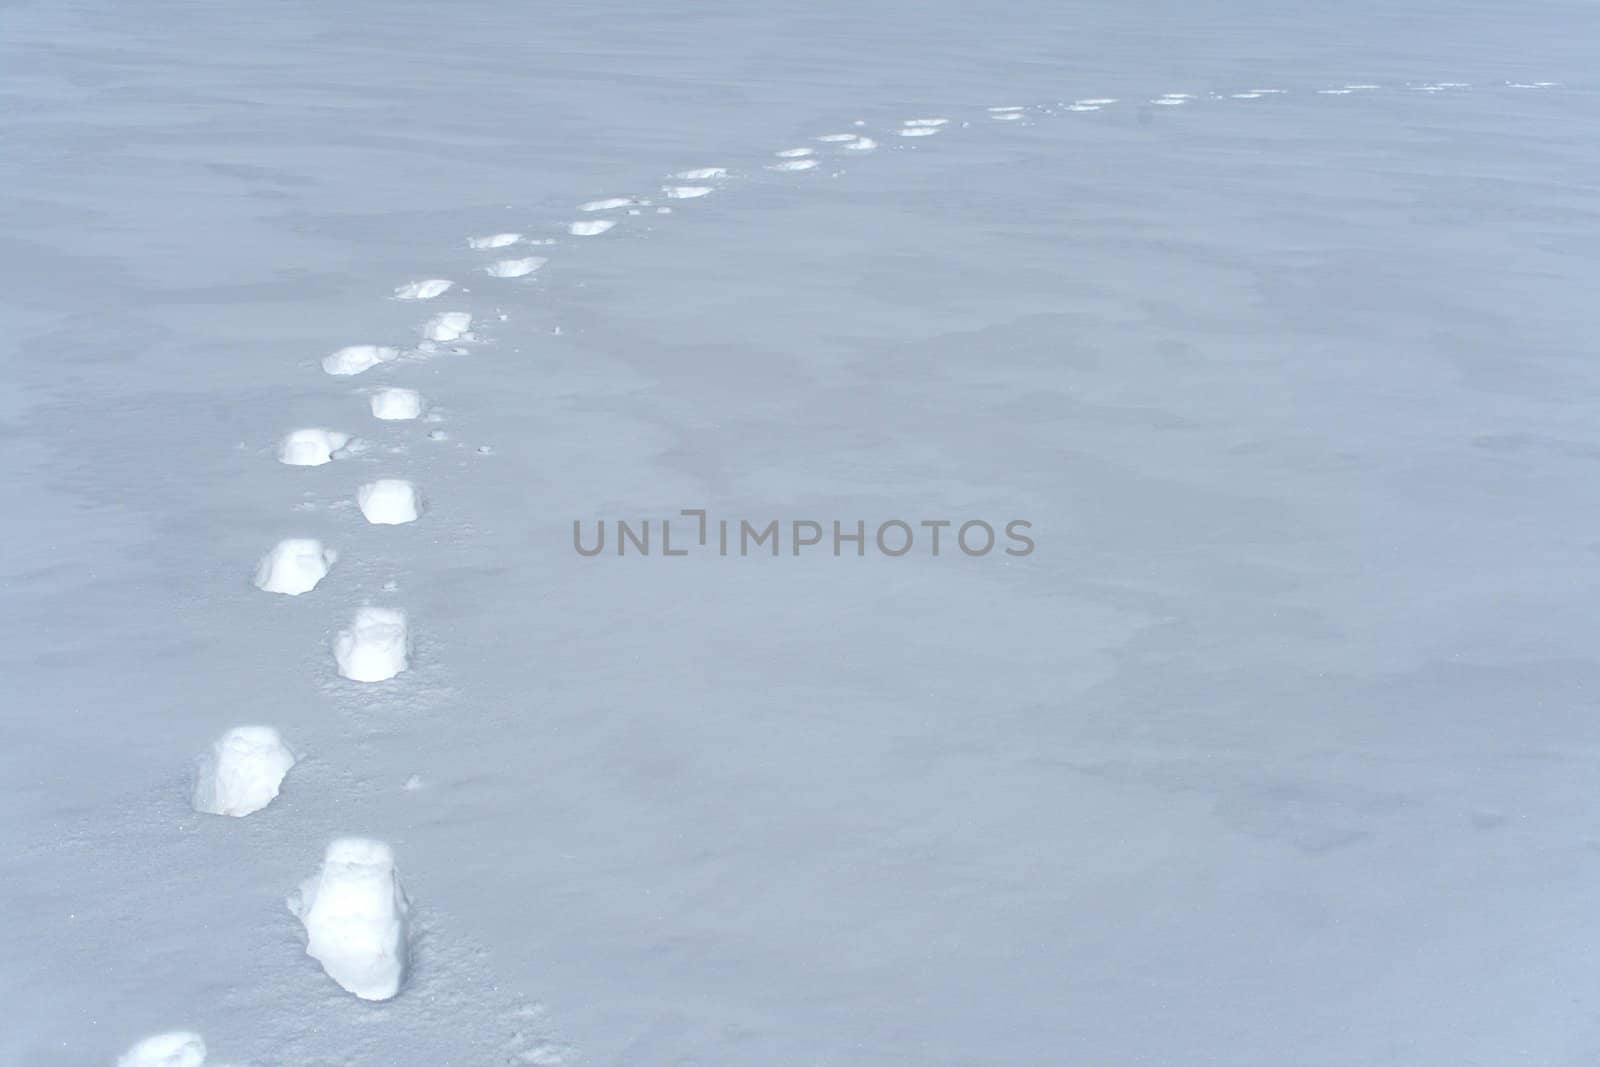 Footprints path crossing a snowy terrain.